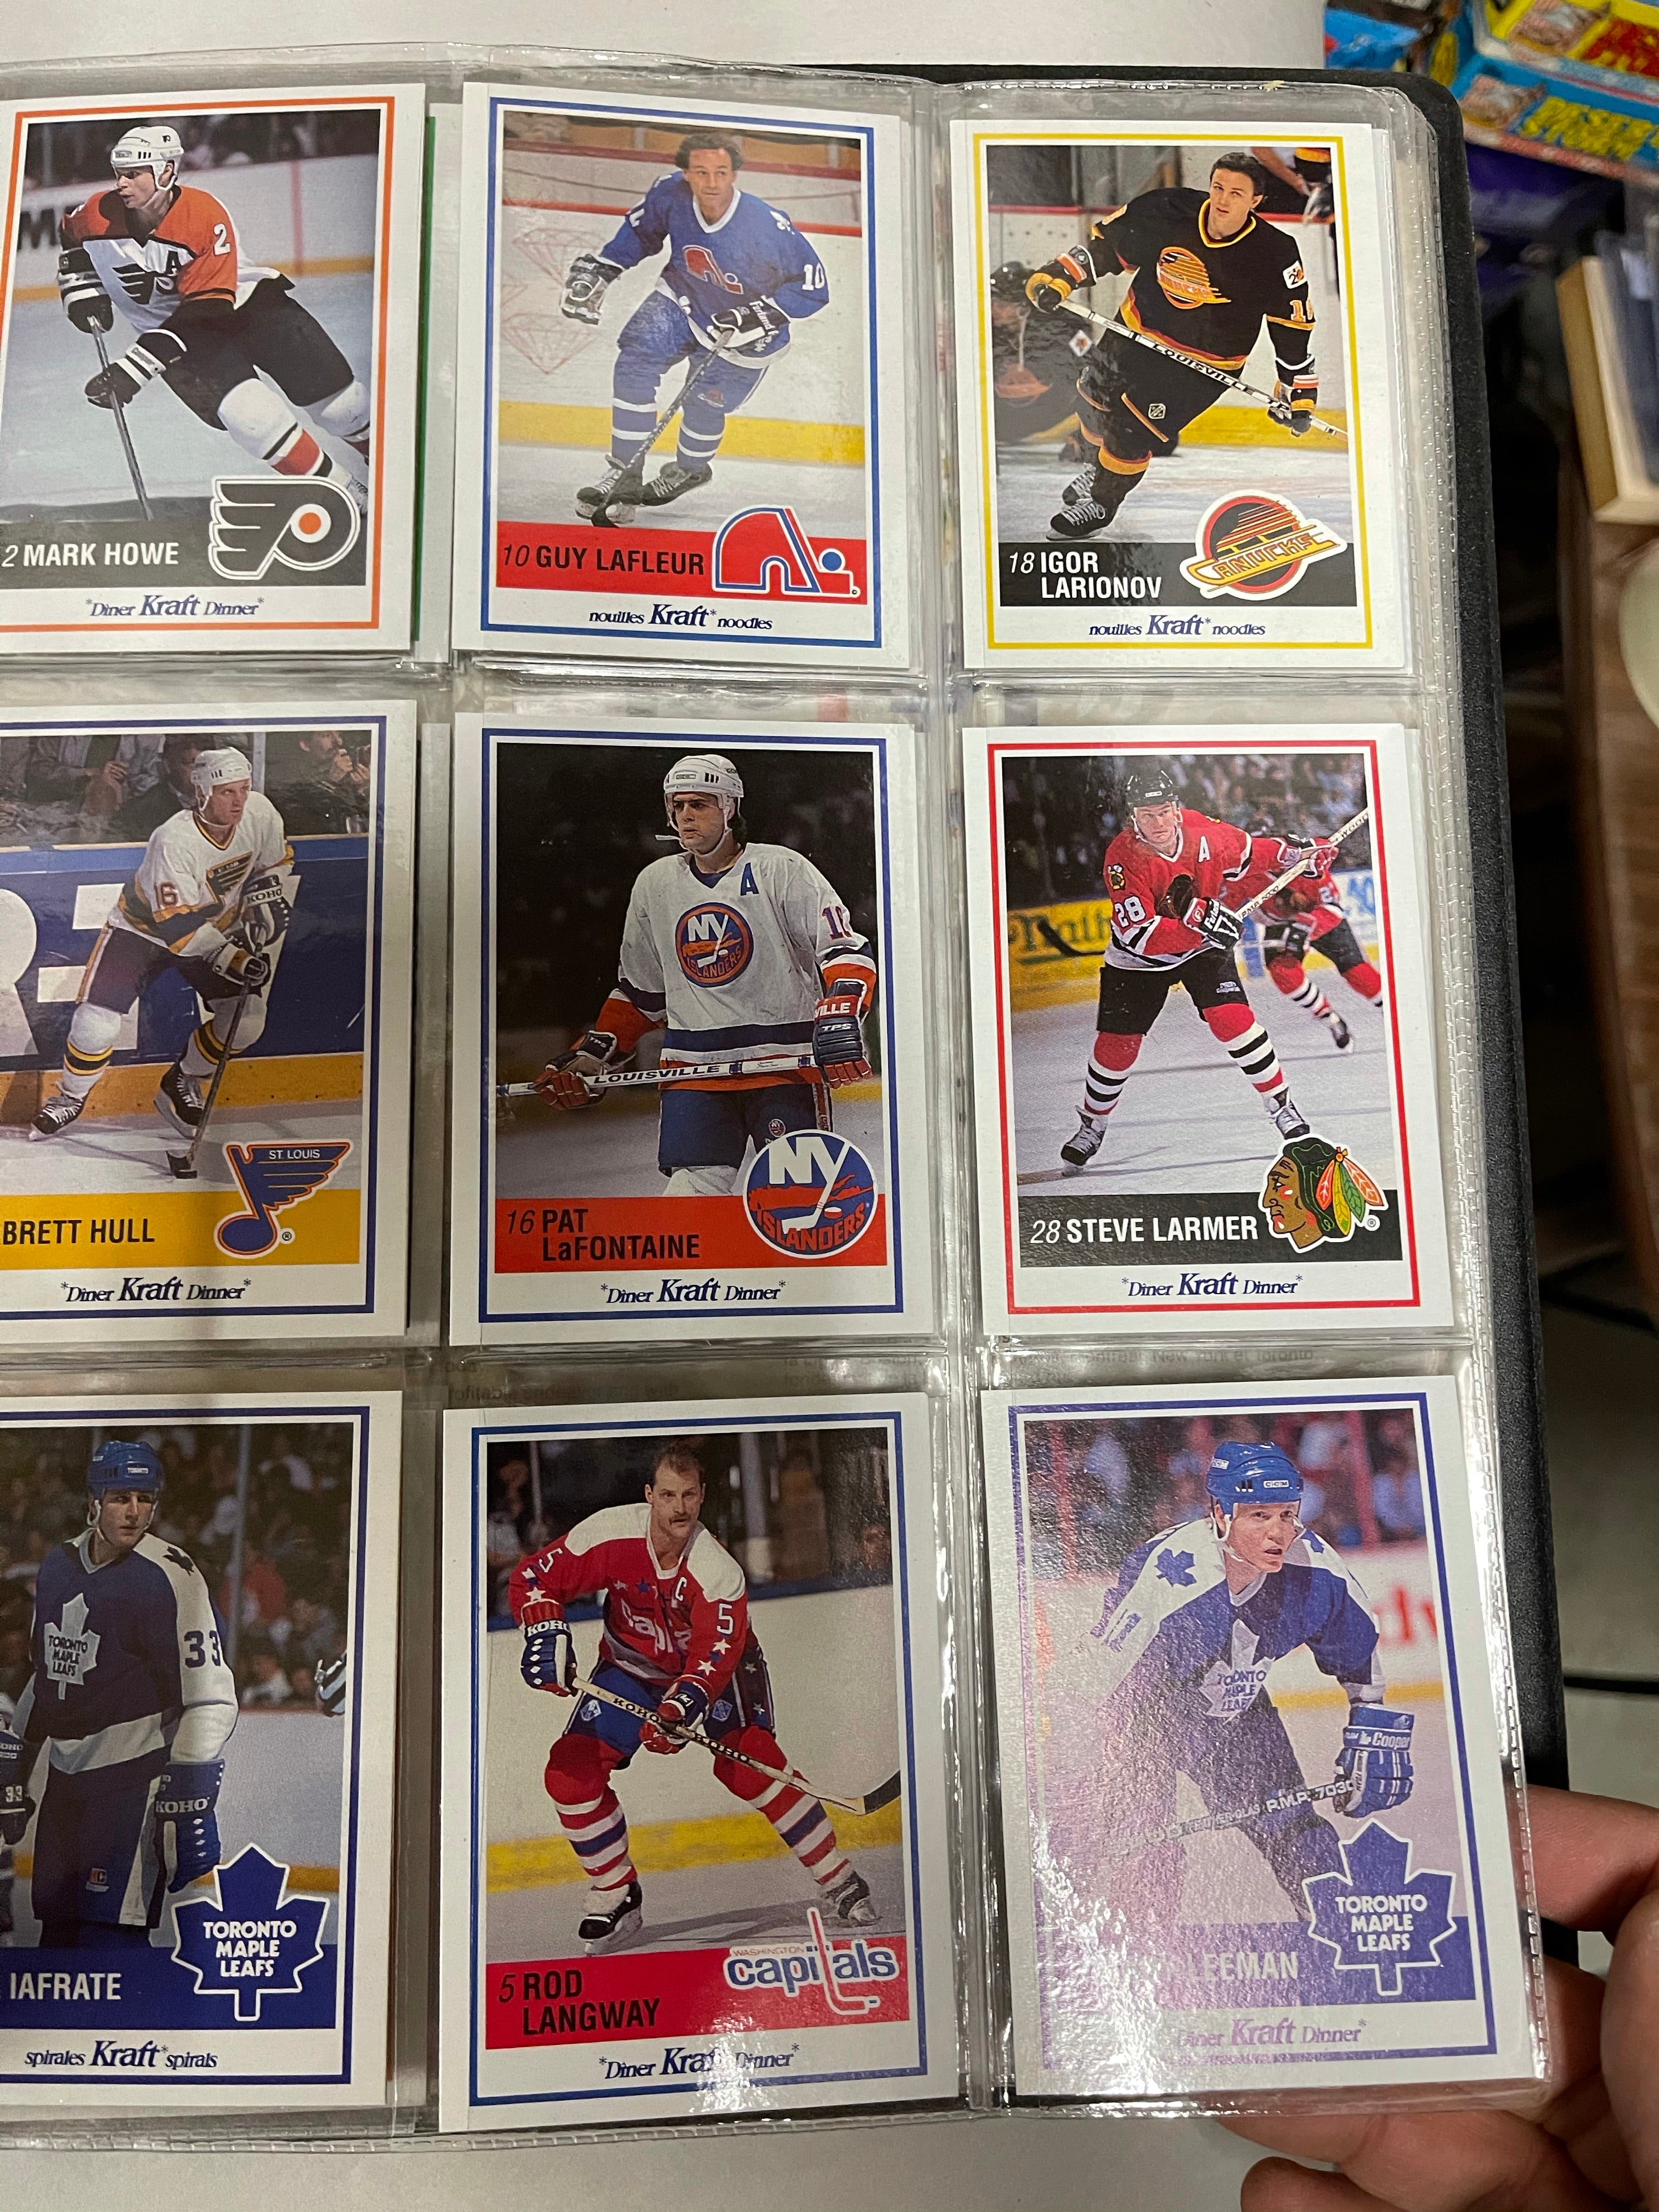 Kraft hockey limited issued complete cards set in Binder 1991/92